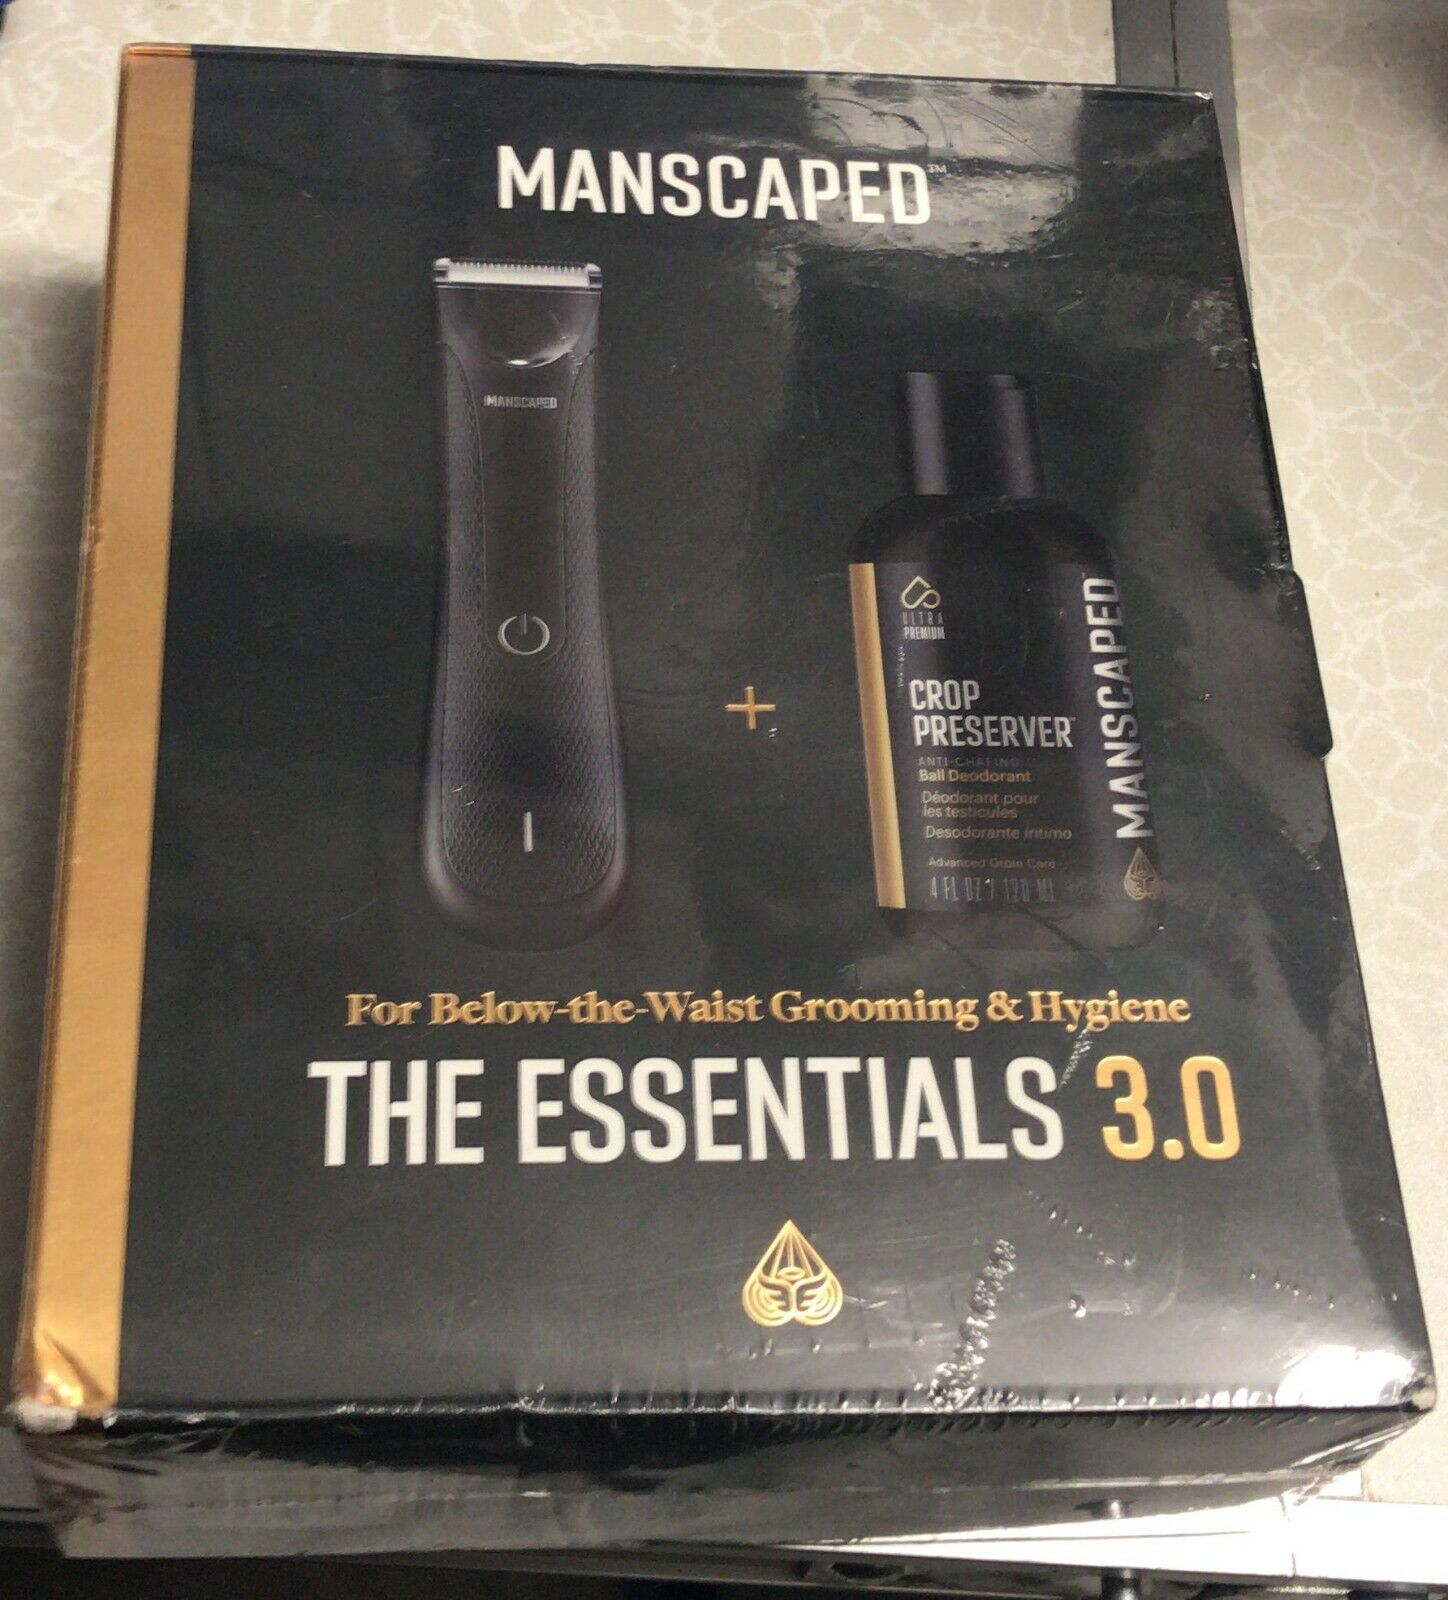 Мужская электробритва Manscaped The Essentials 3.0 Grooming and Hygiene  Body Shaver - Black (Z6): купить с доставкой из США, цена 4 978 руб -  (115474977922)